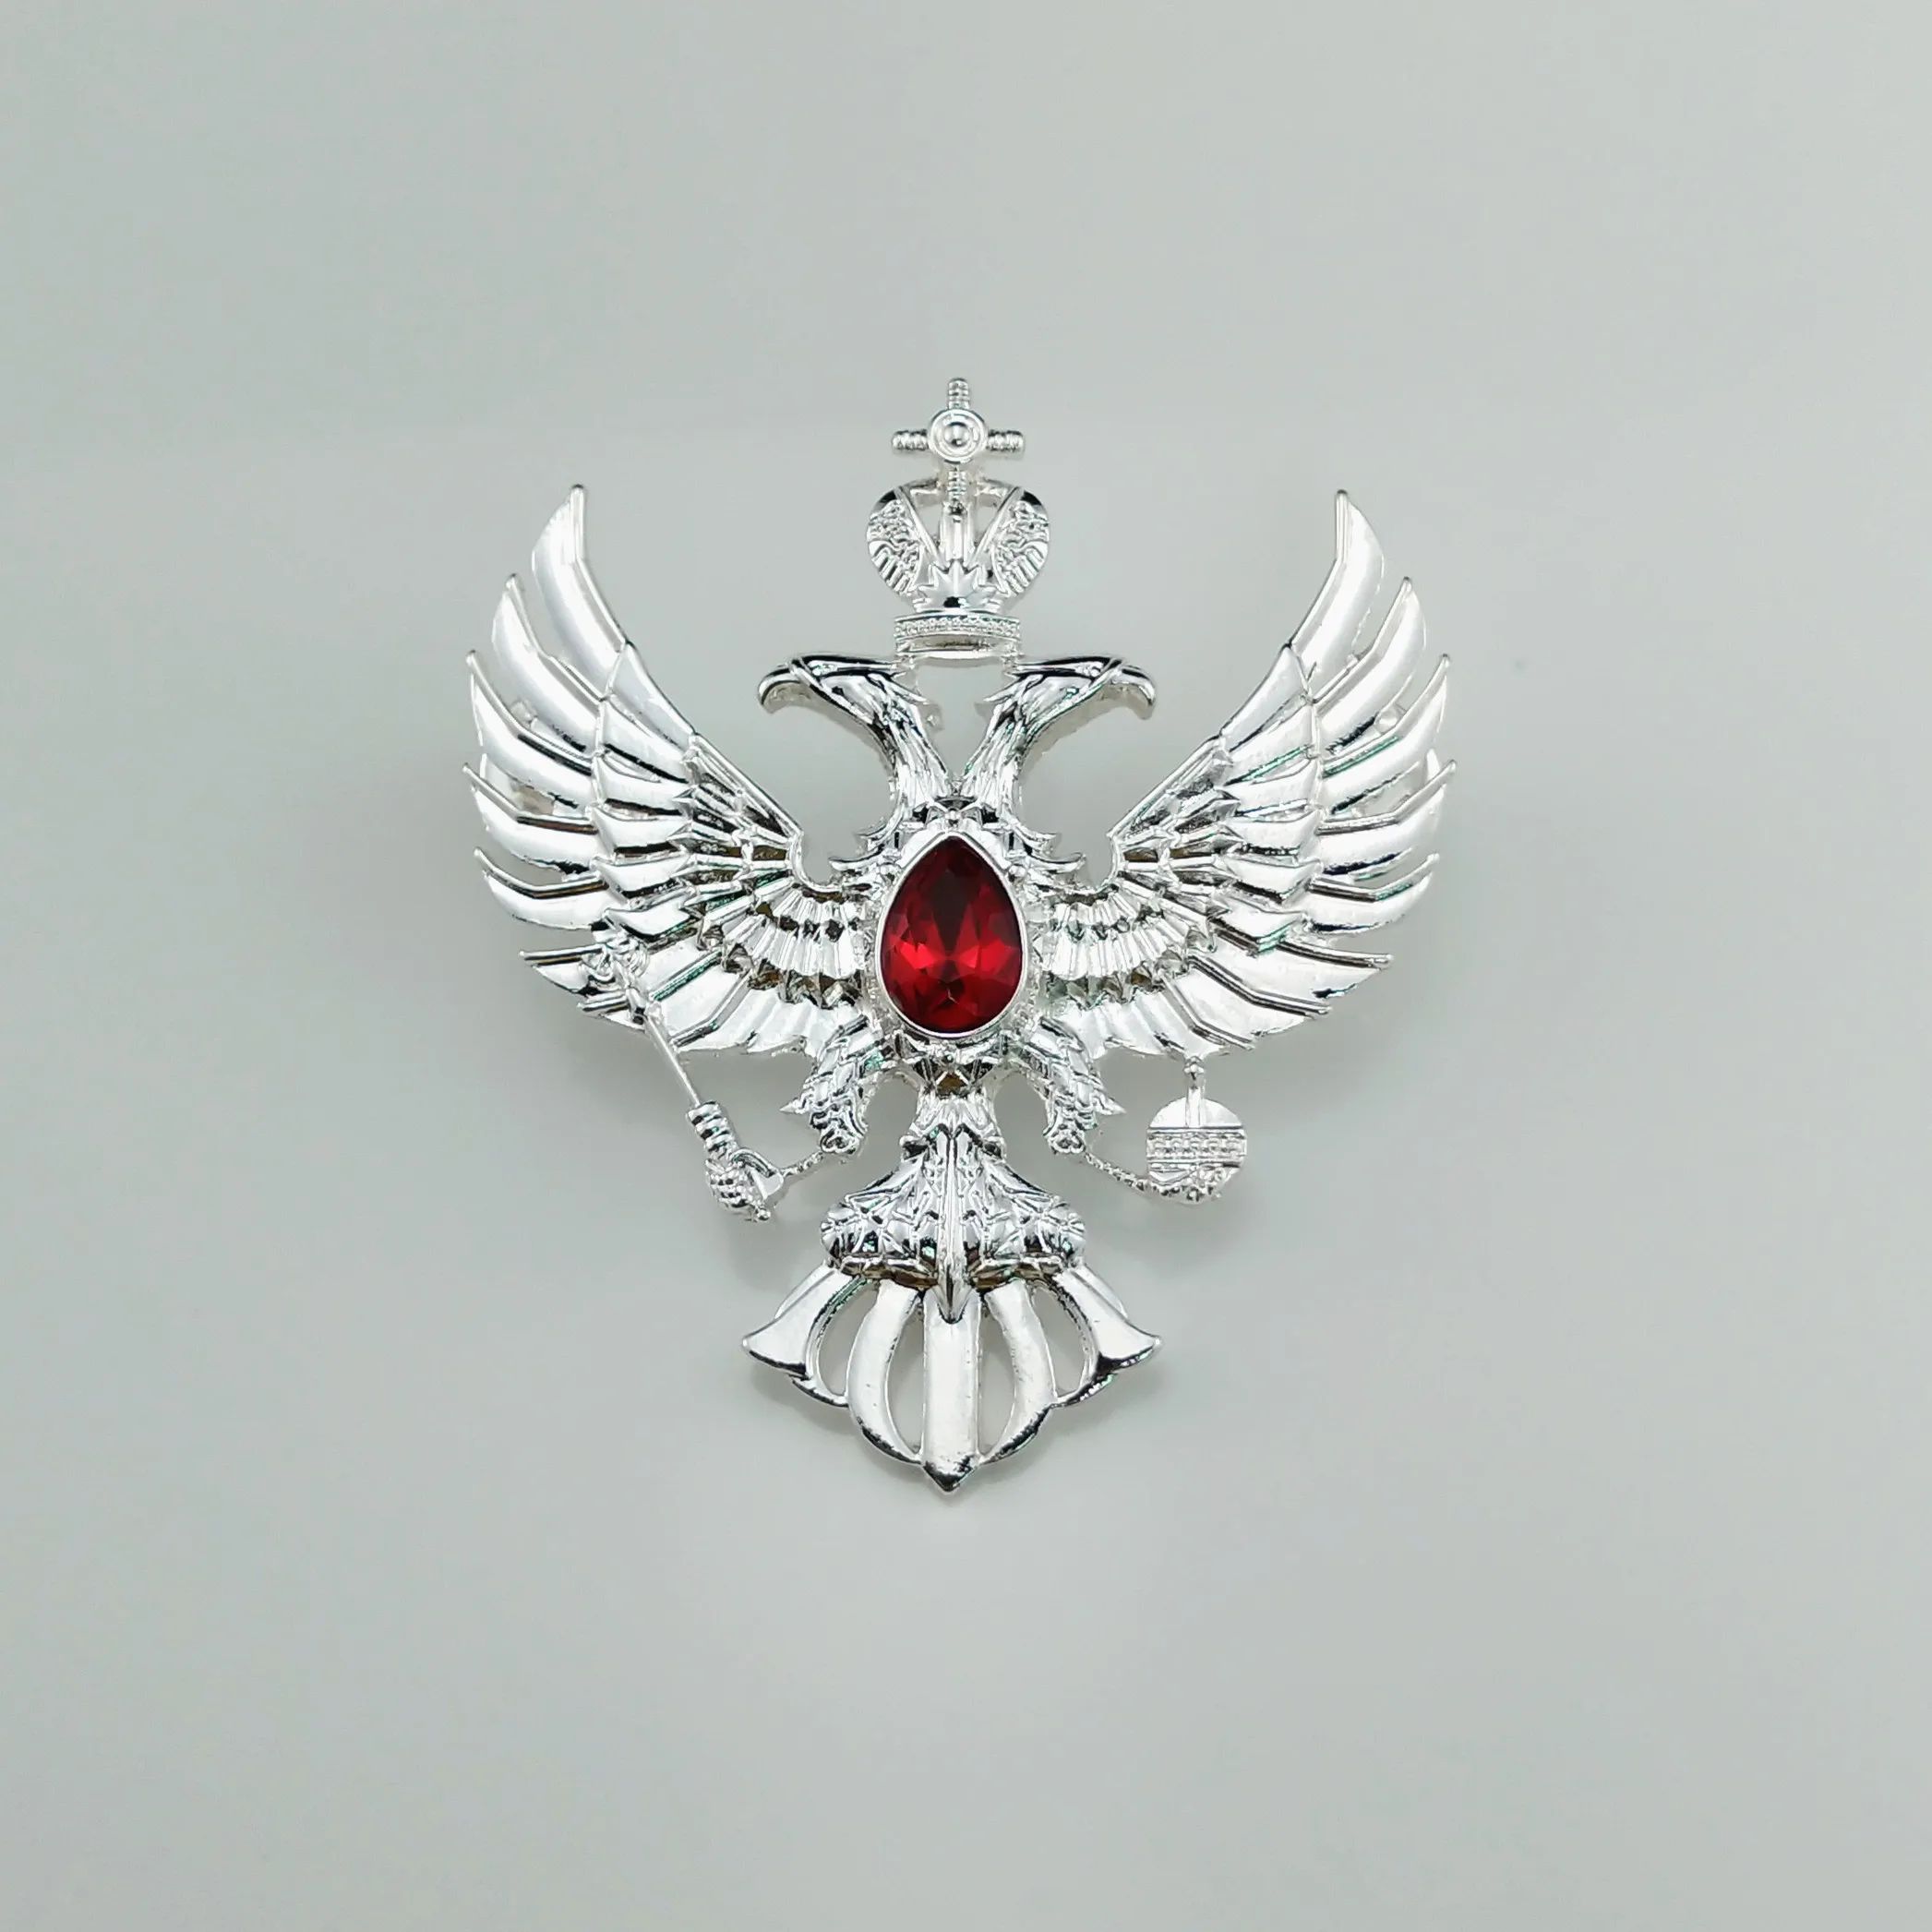 WR Russian Double Headed Eagle Lapel Pin Silver Rhinestone Brooch Gifts For Men 